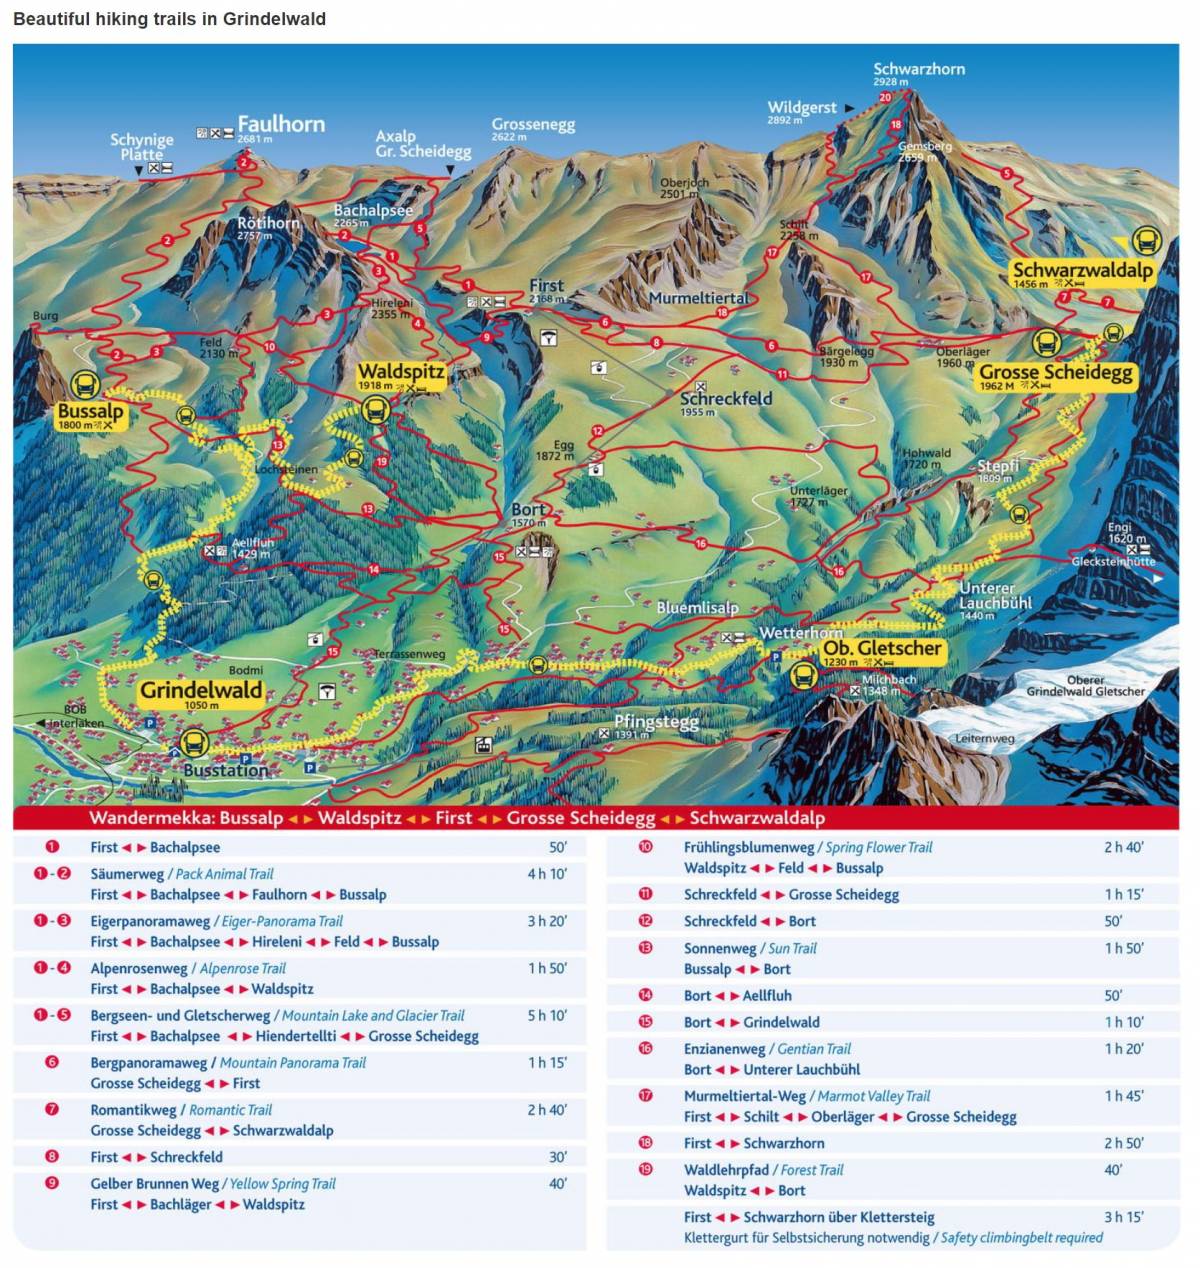 Grindelwald Hiking Trail (curtesy Grindelwaldbus website)